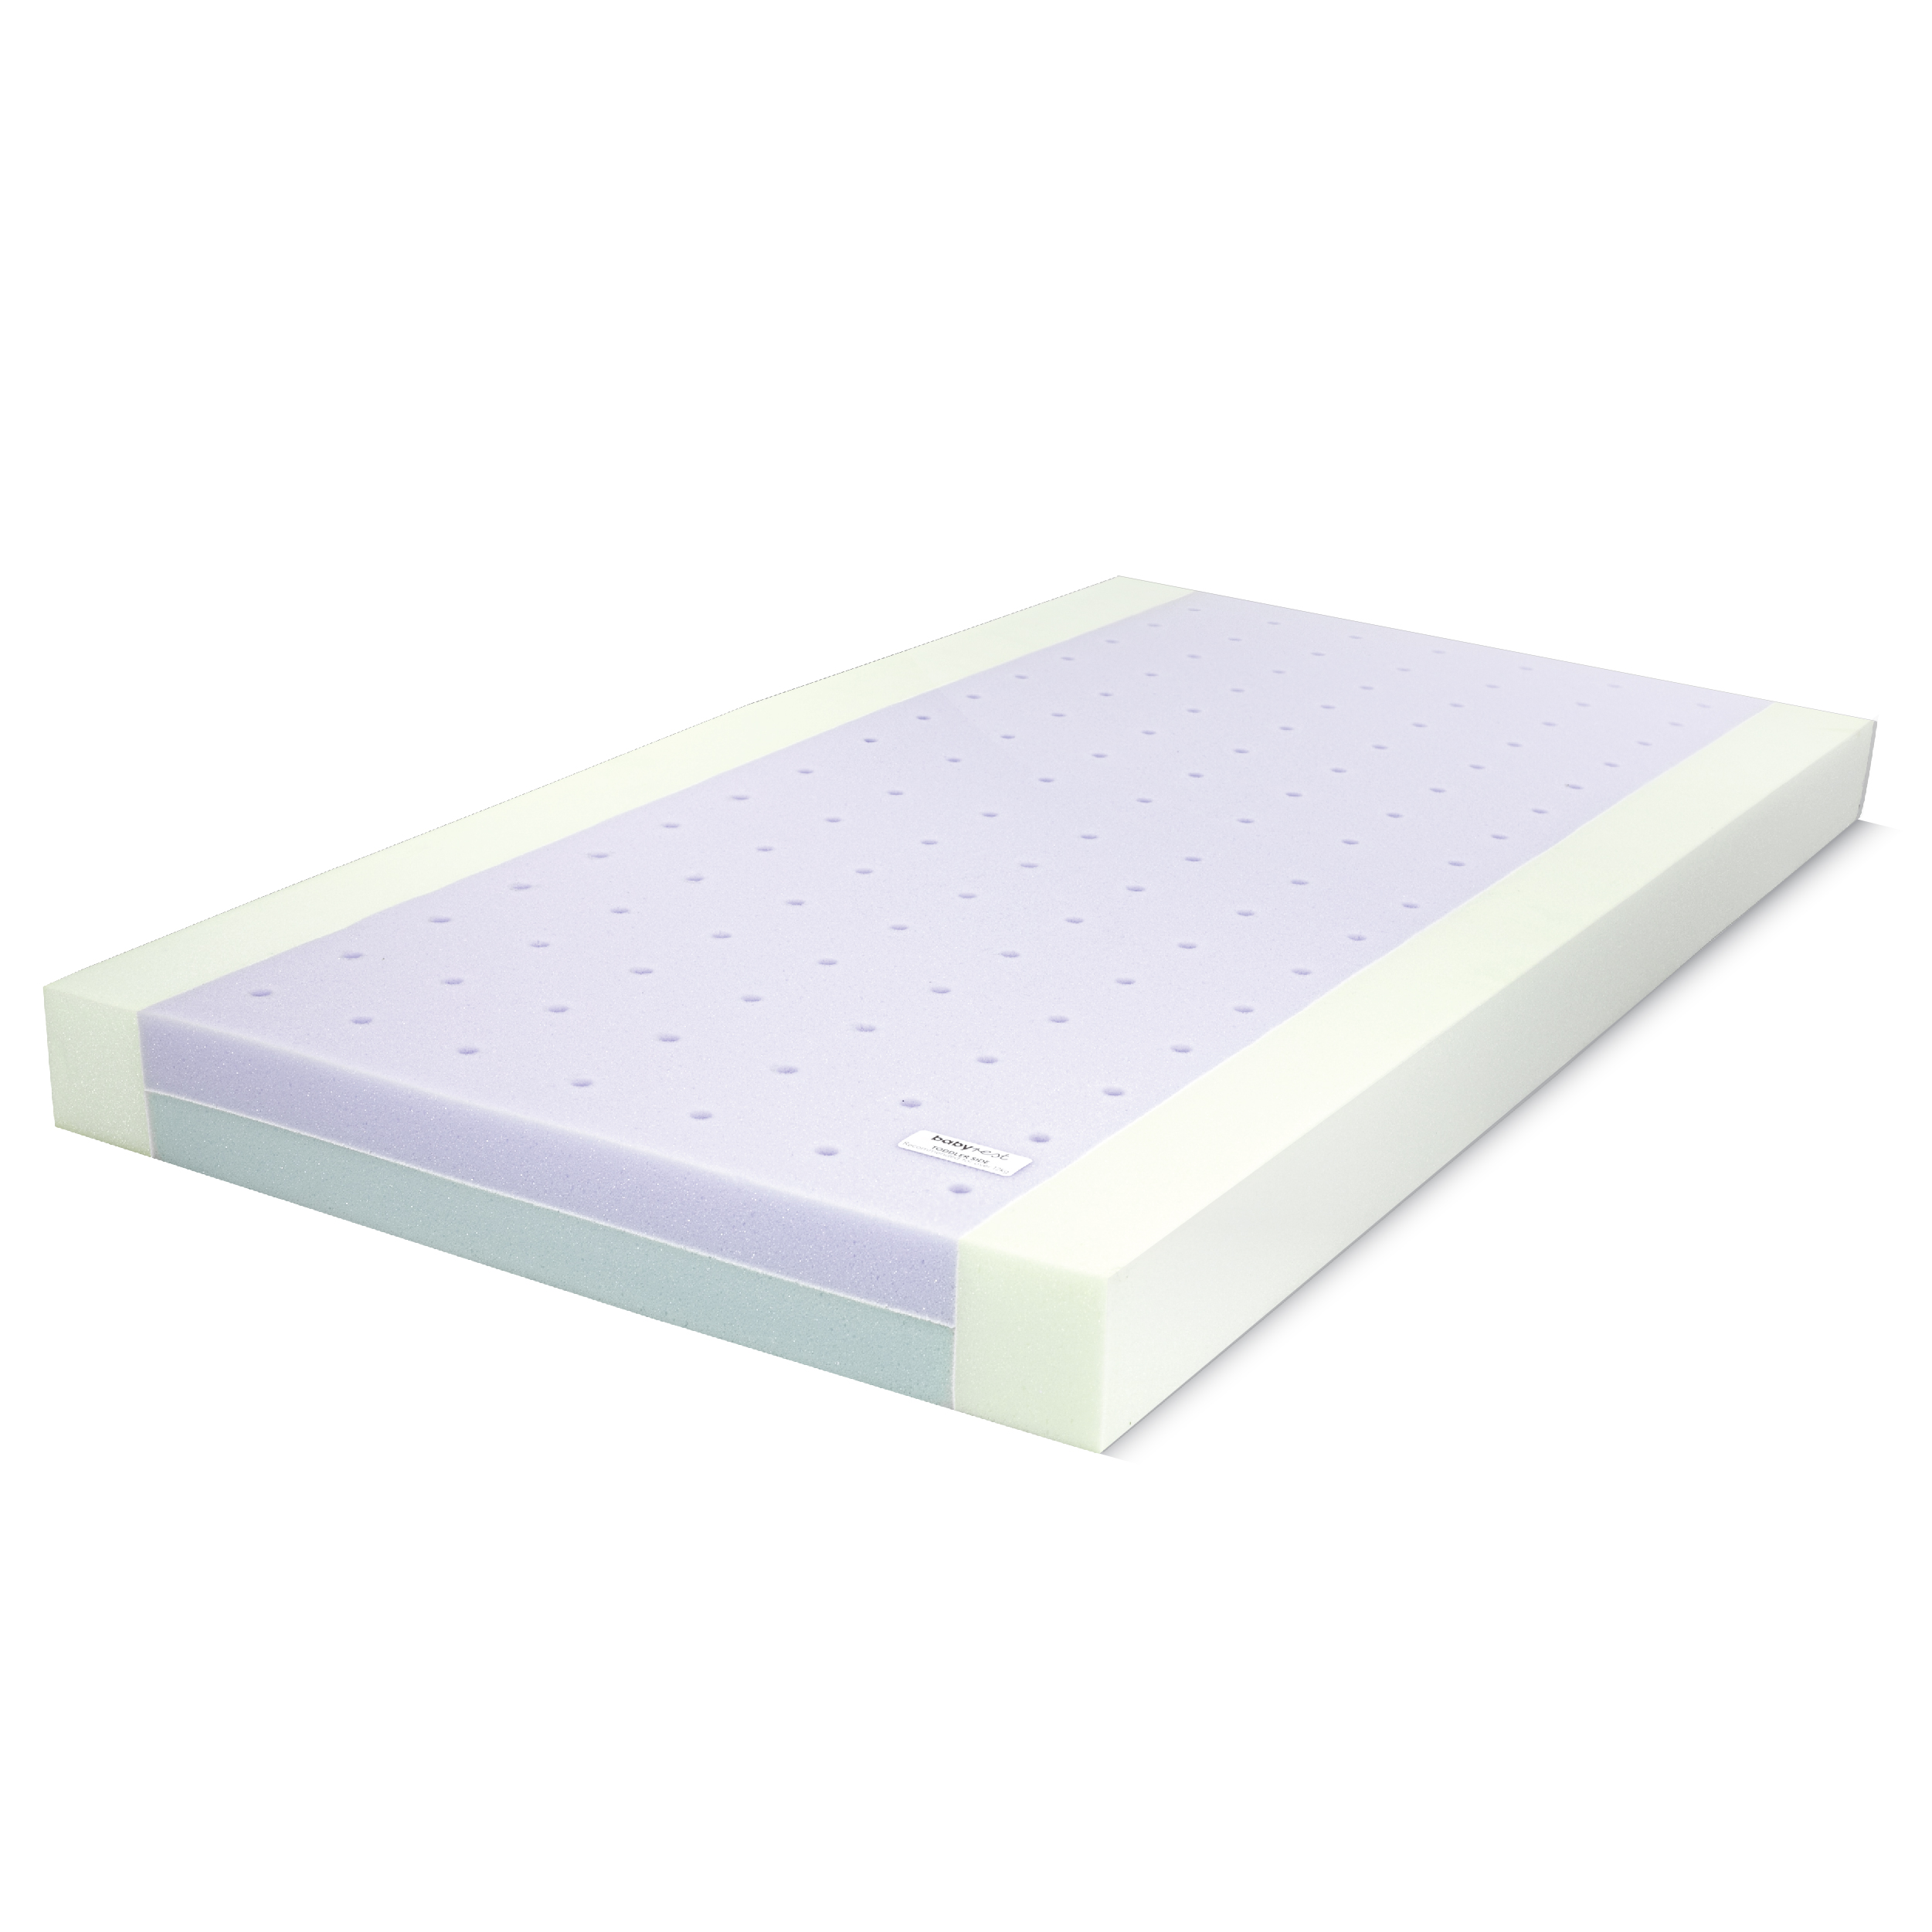 cot mattress 1310 x 700